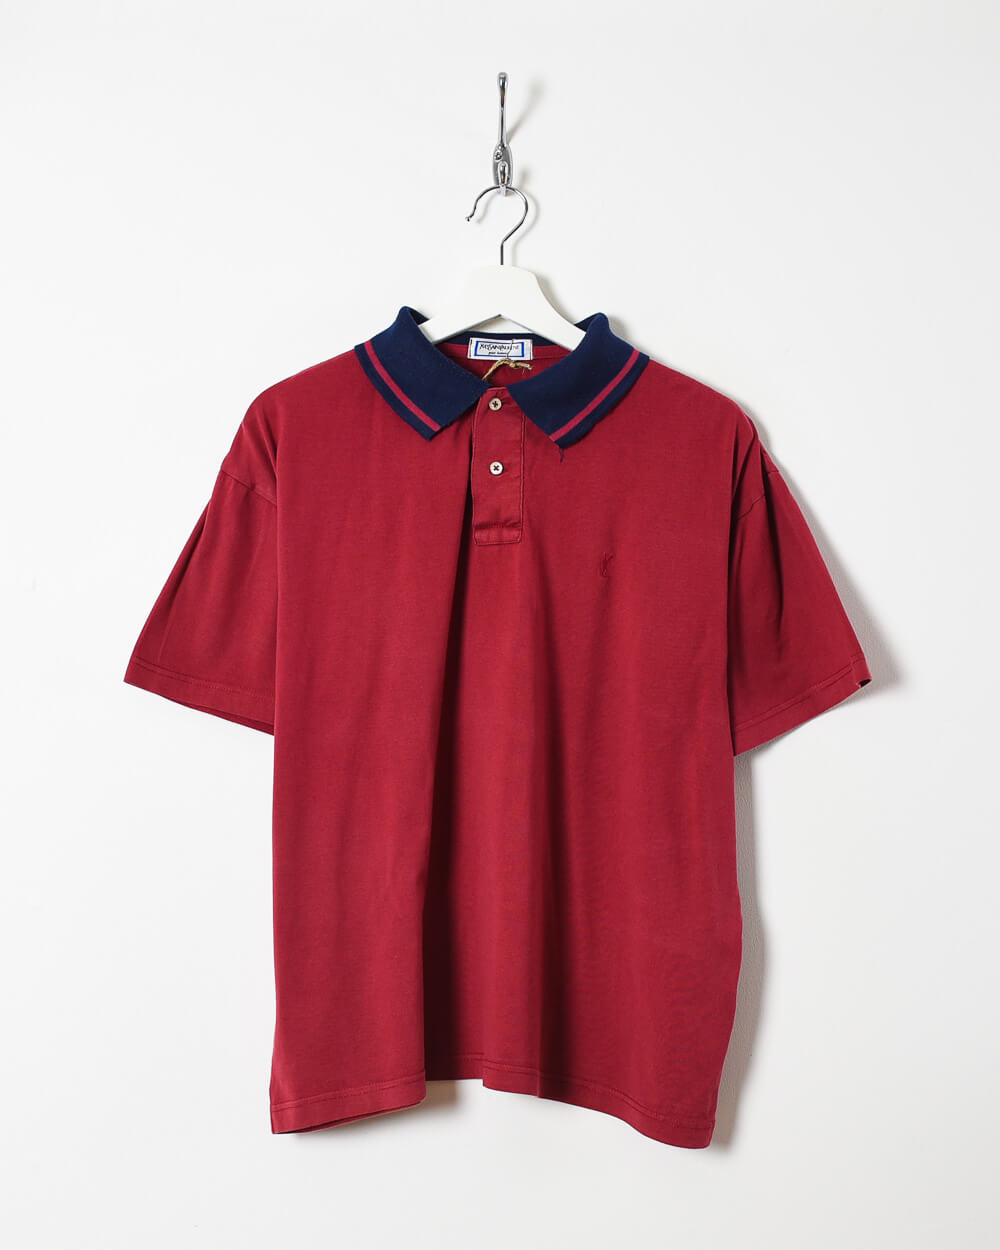 Red Yves Saint Laurent Polo Shirt - Medium